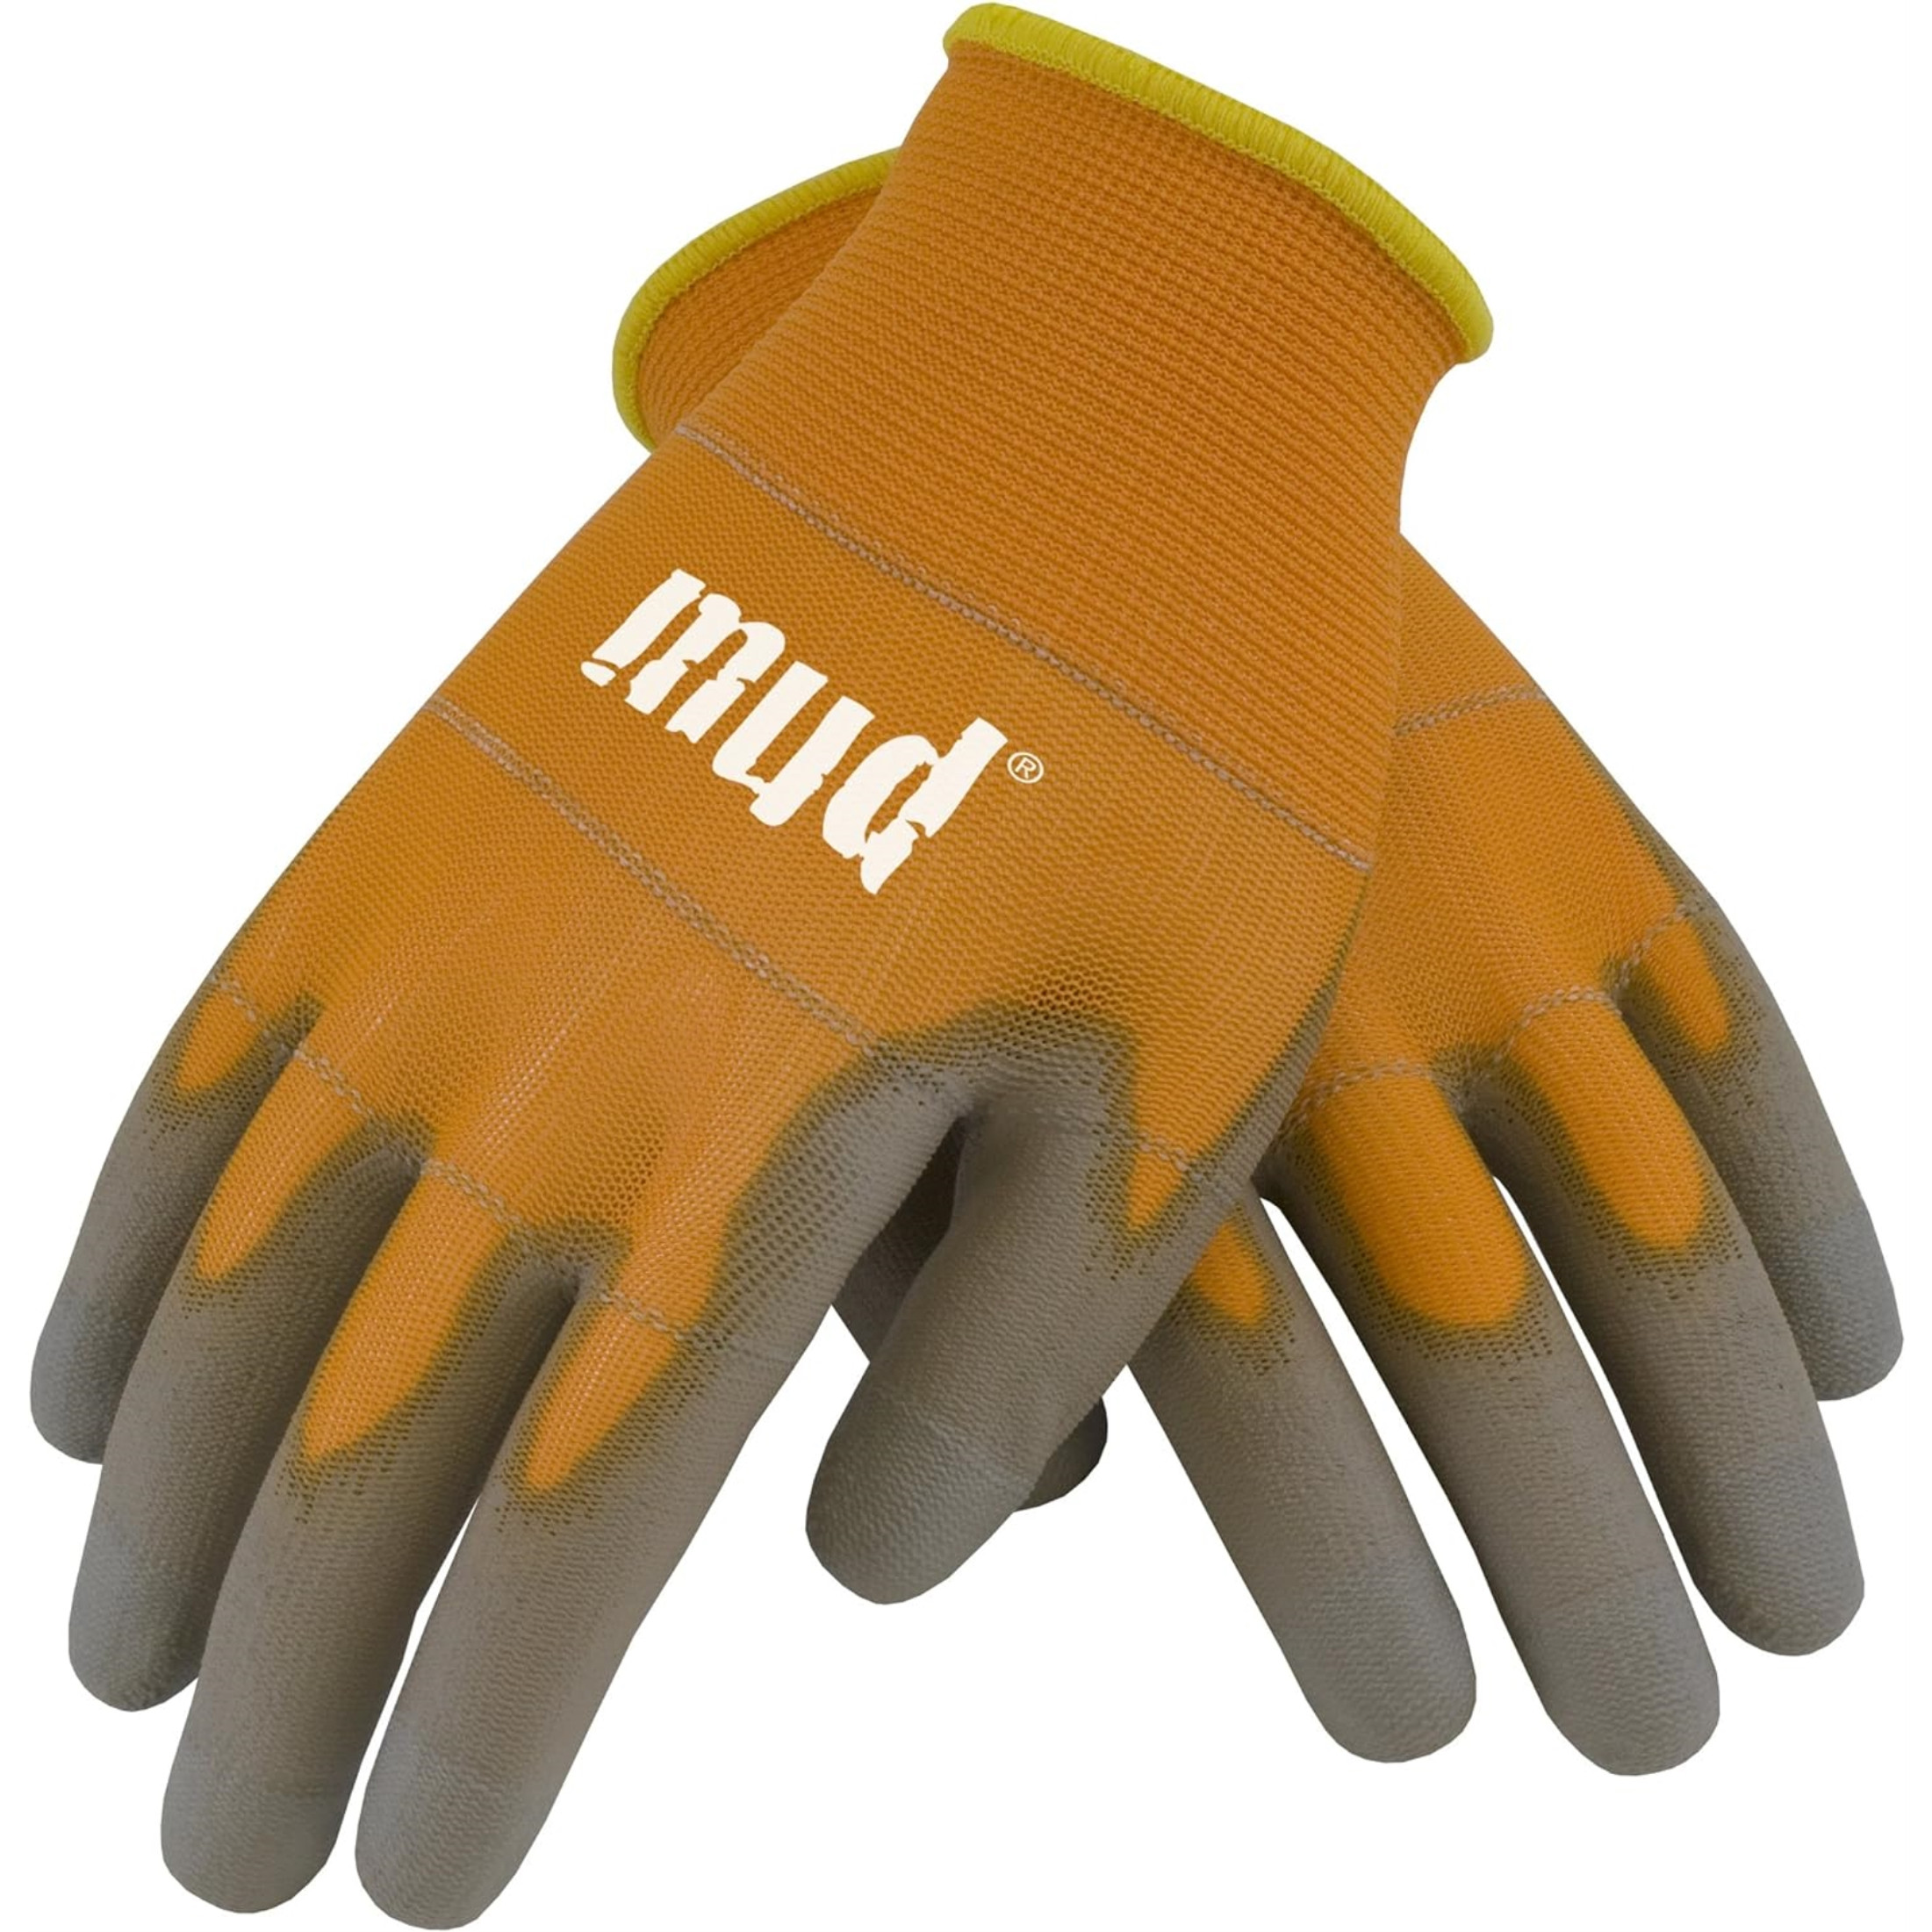 Mud Smart Gardening Gloves, Durable Abrasion Resistant Gloves, Orange, Small